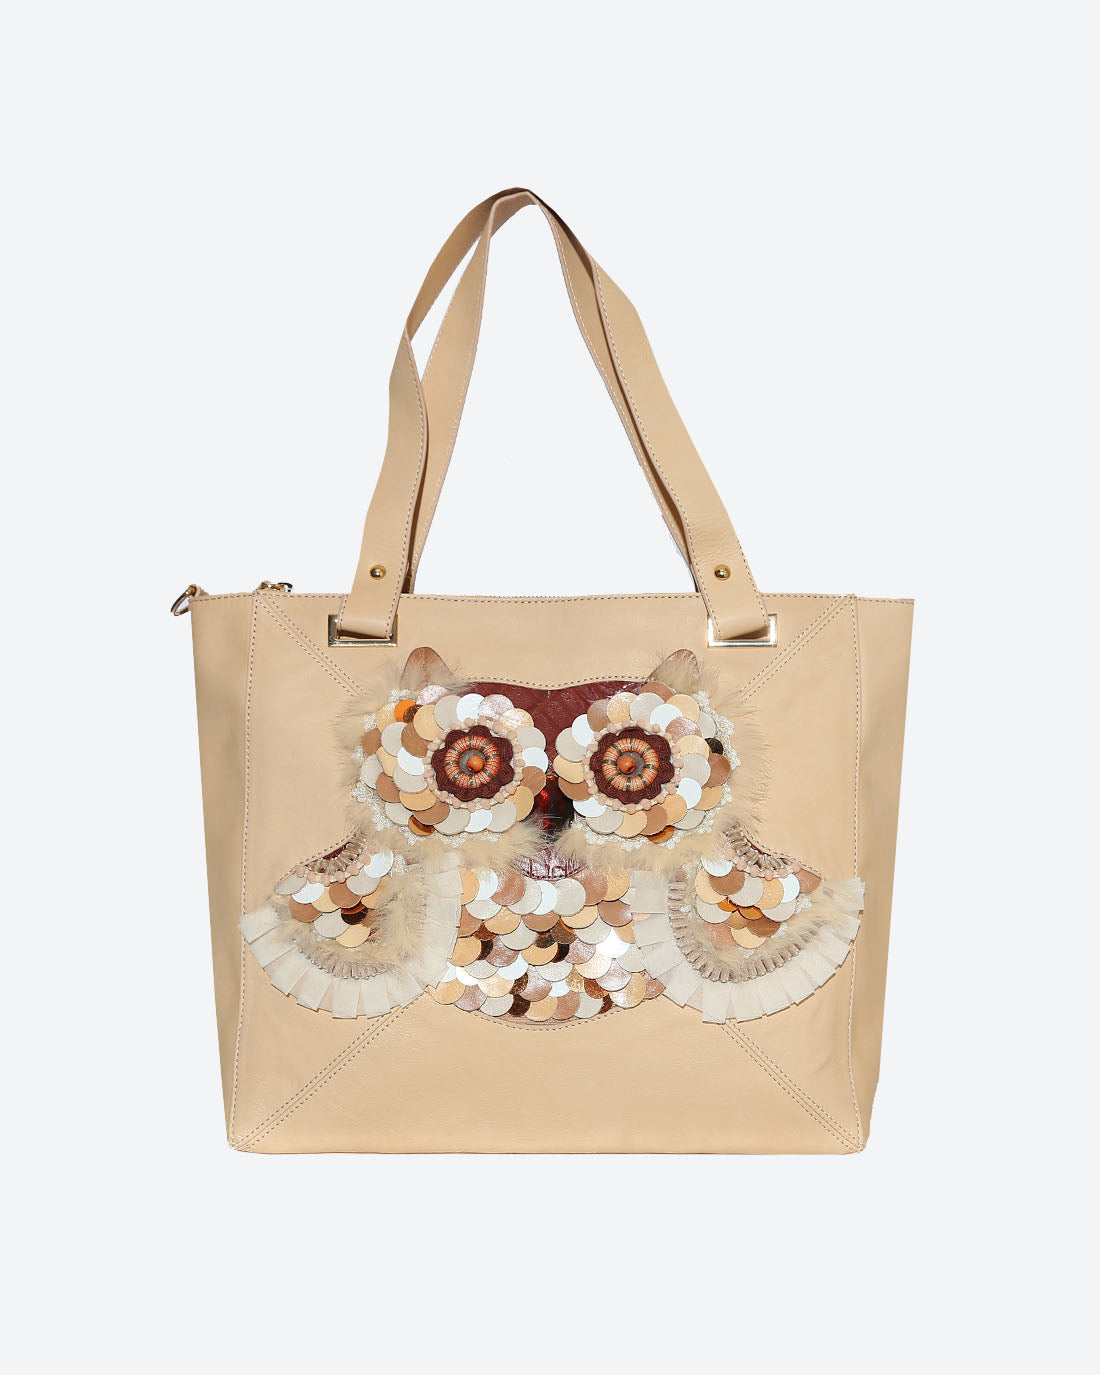 OWL Leather Applique Tote Bag